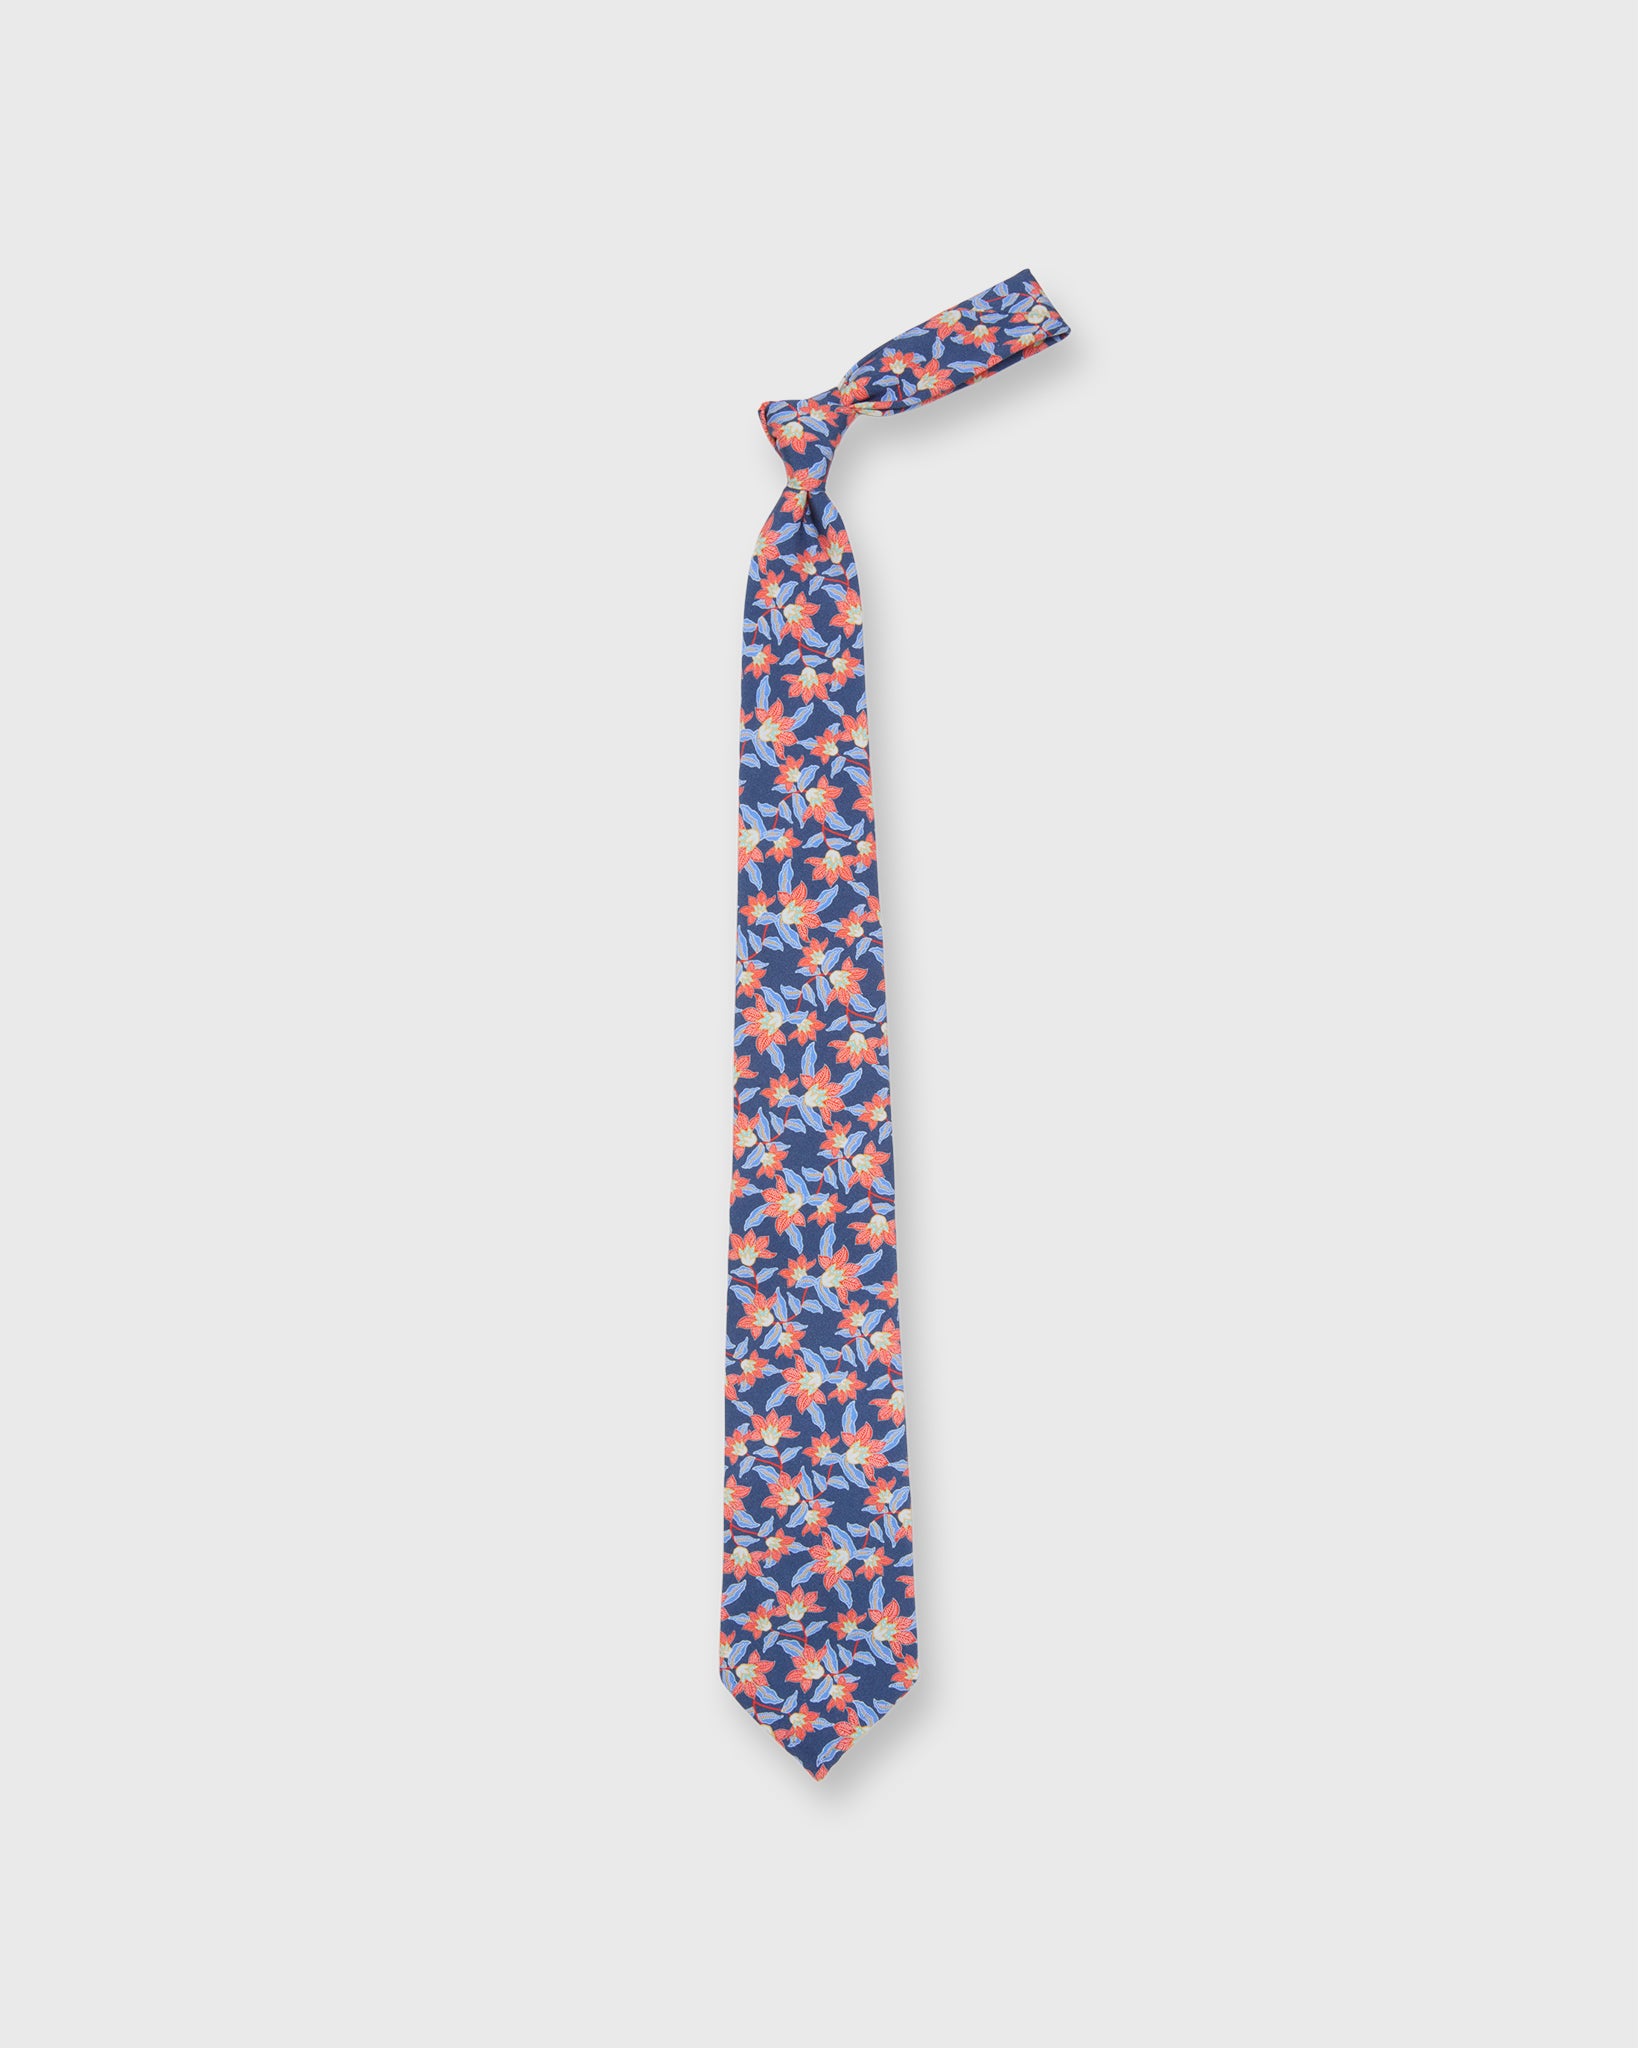 Silk Print Tie in Mid Blue/Coral Floral